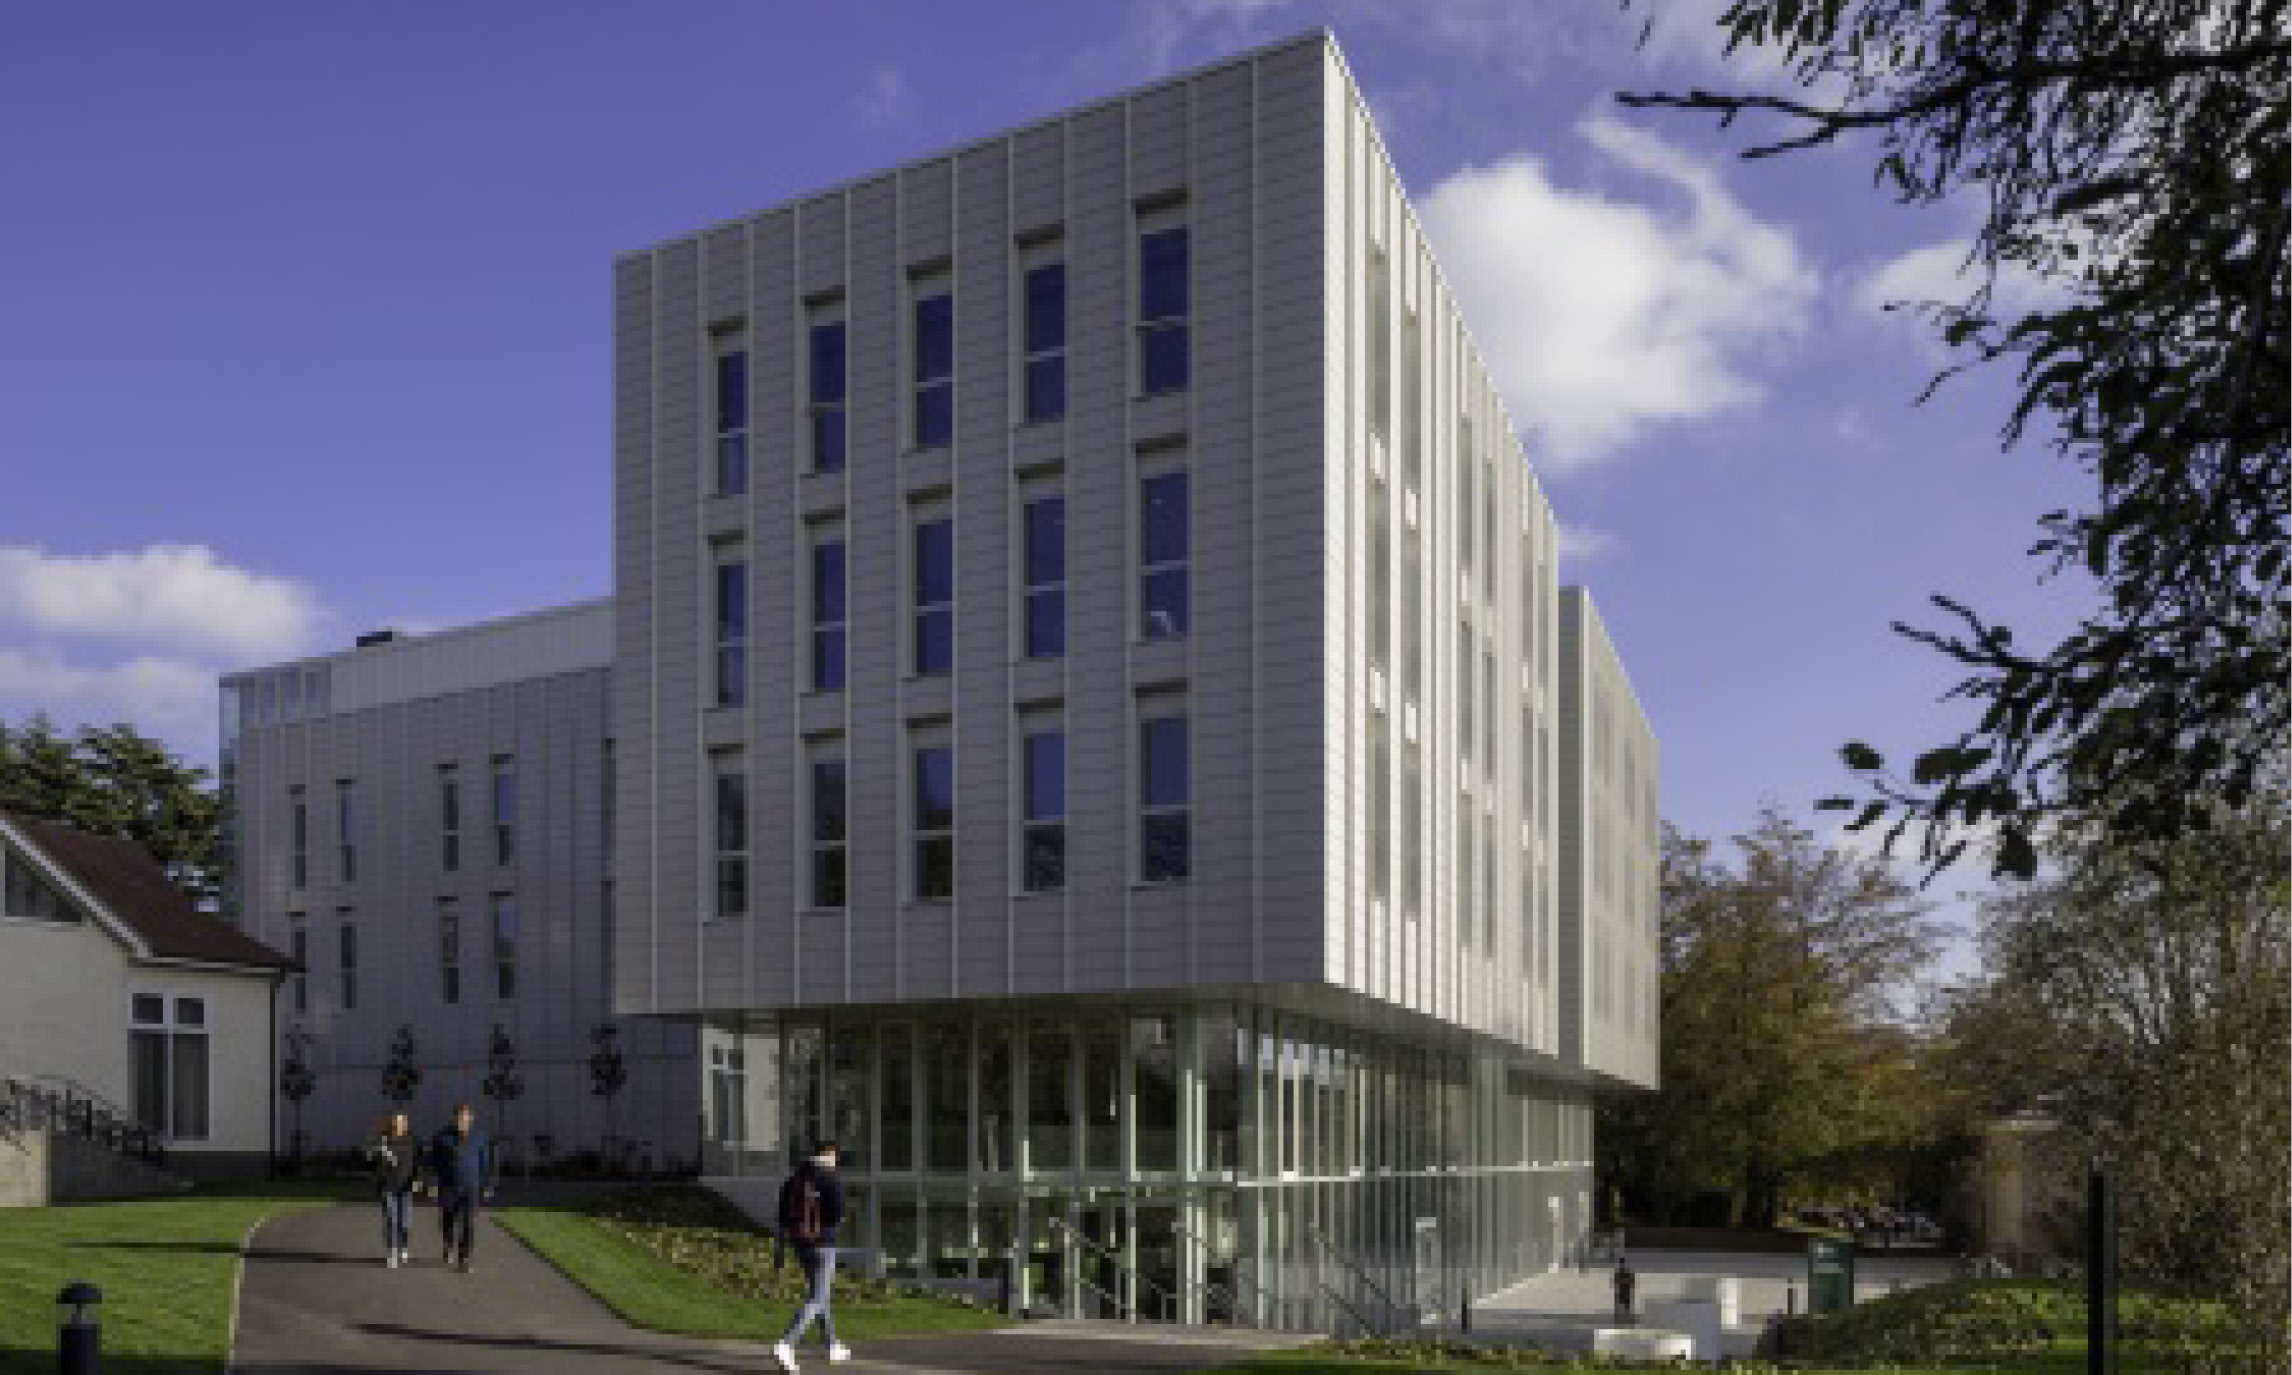 Building on University Park campus